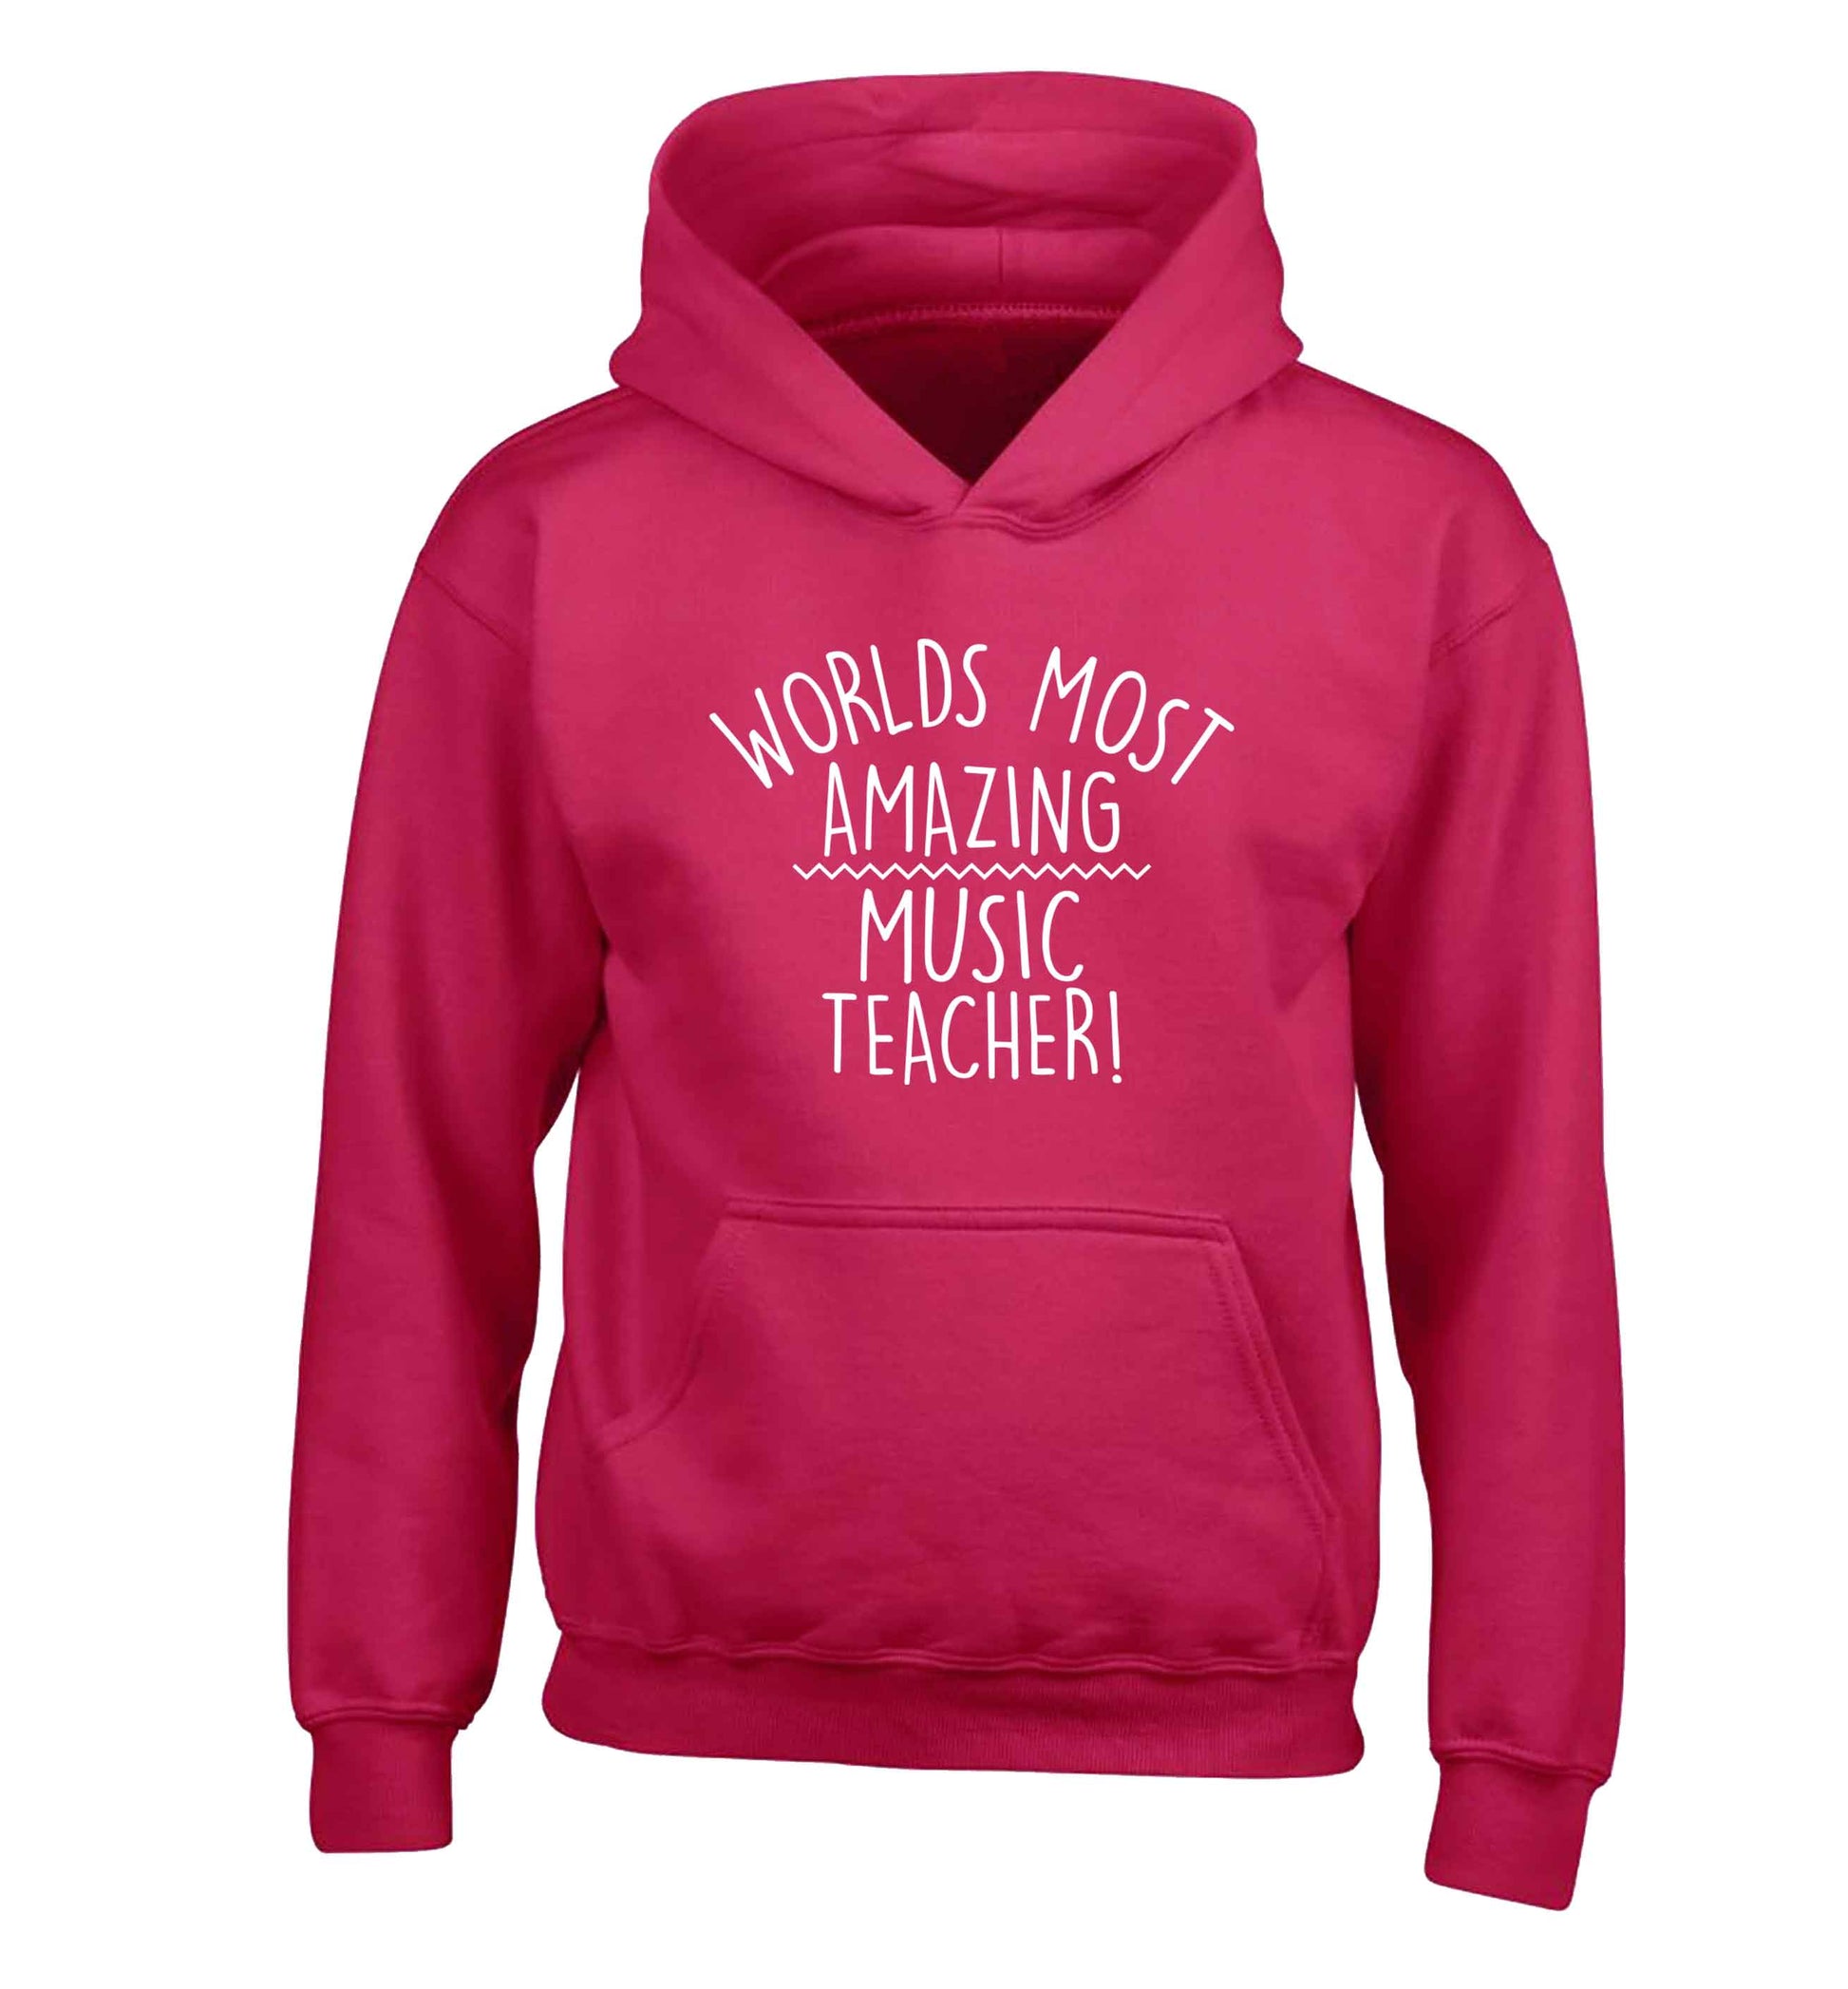 Worlds most amazing music teacher children's pink hoodie 12-13 Years